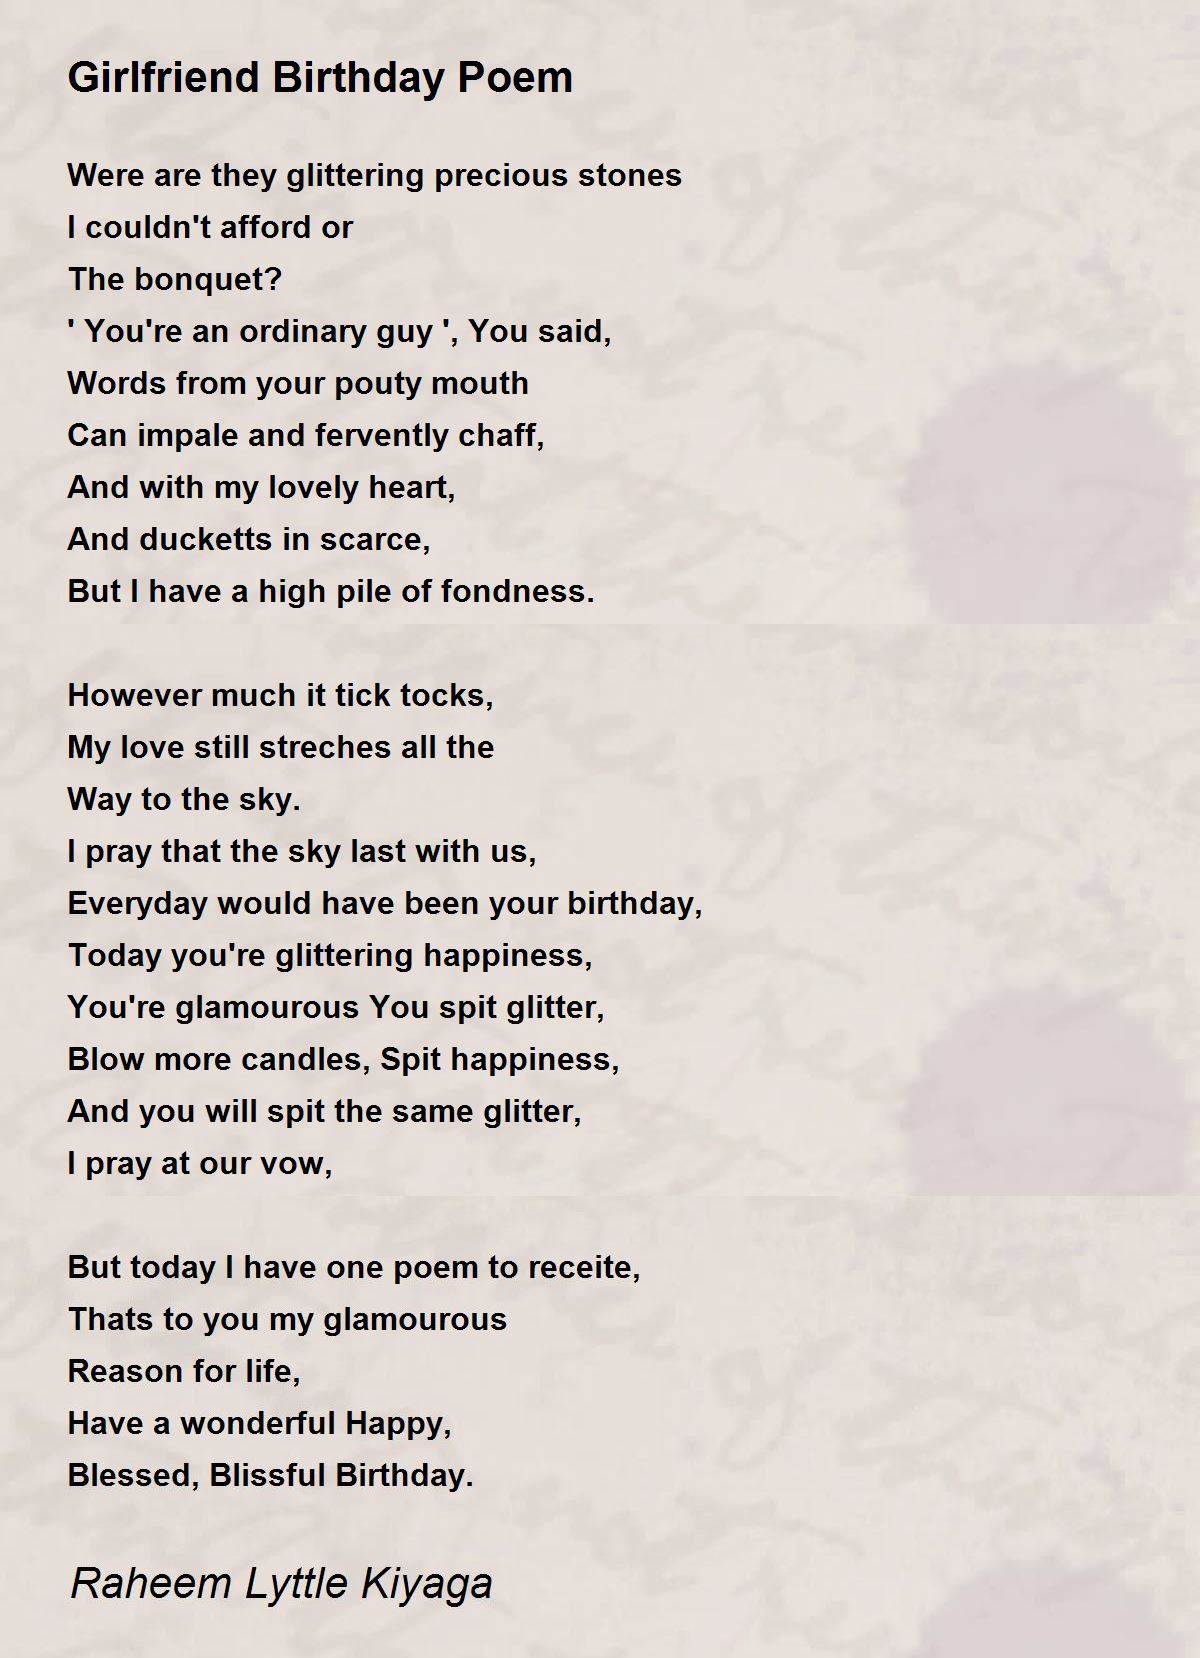 Girlfriend Birthday Poem By Raheem